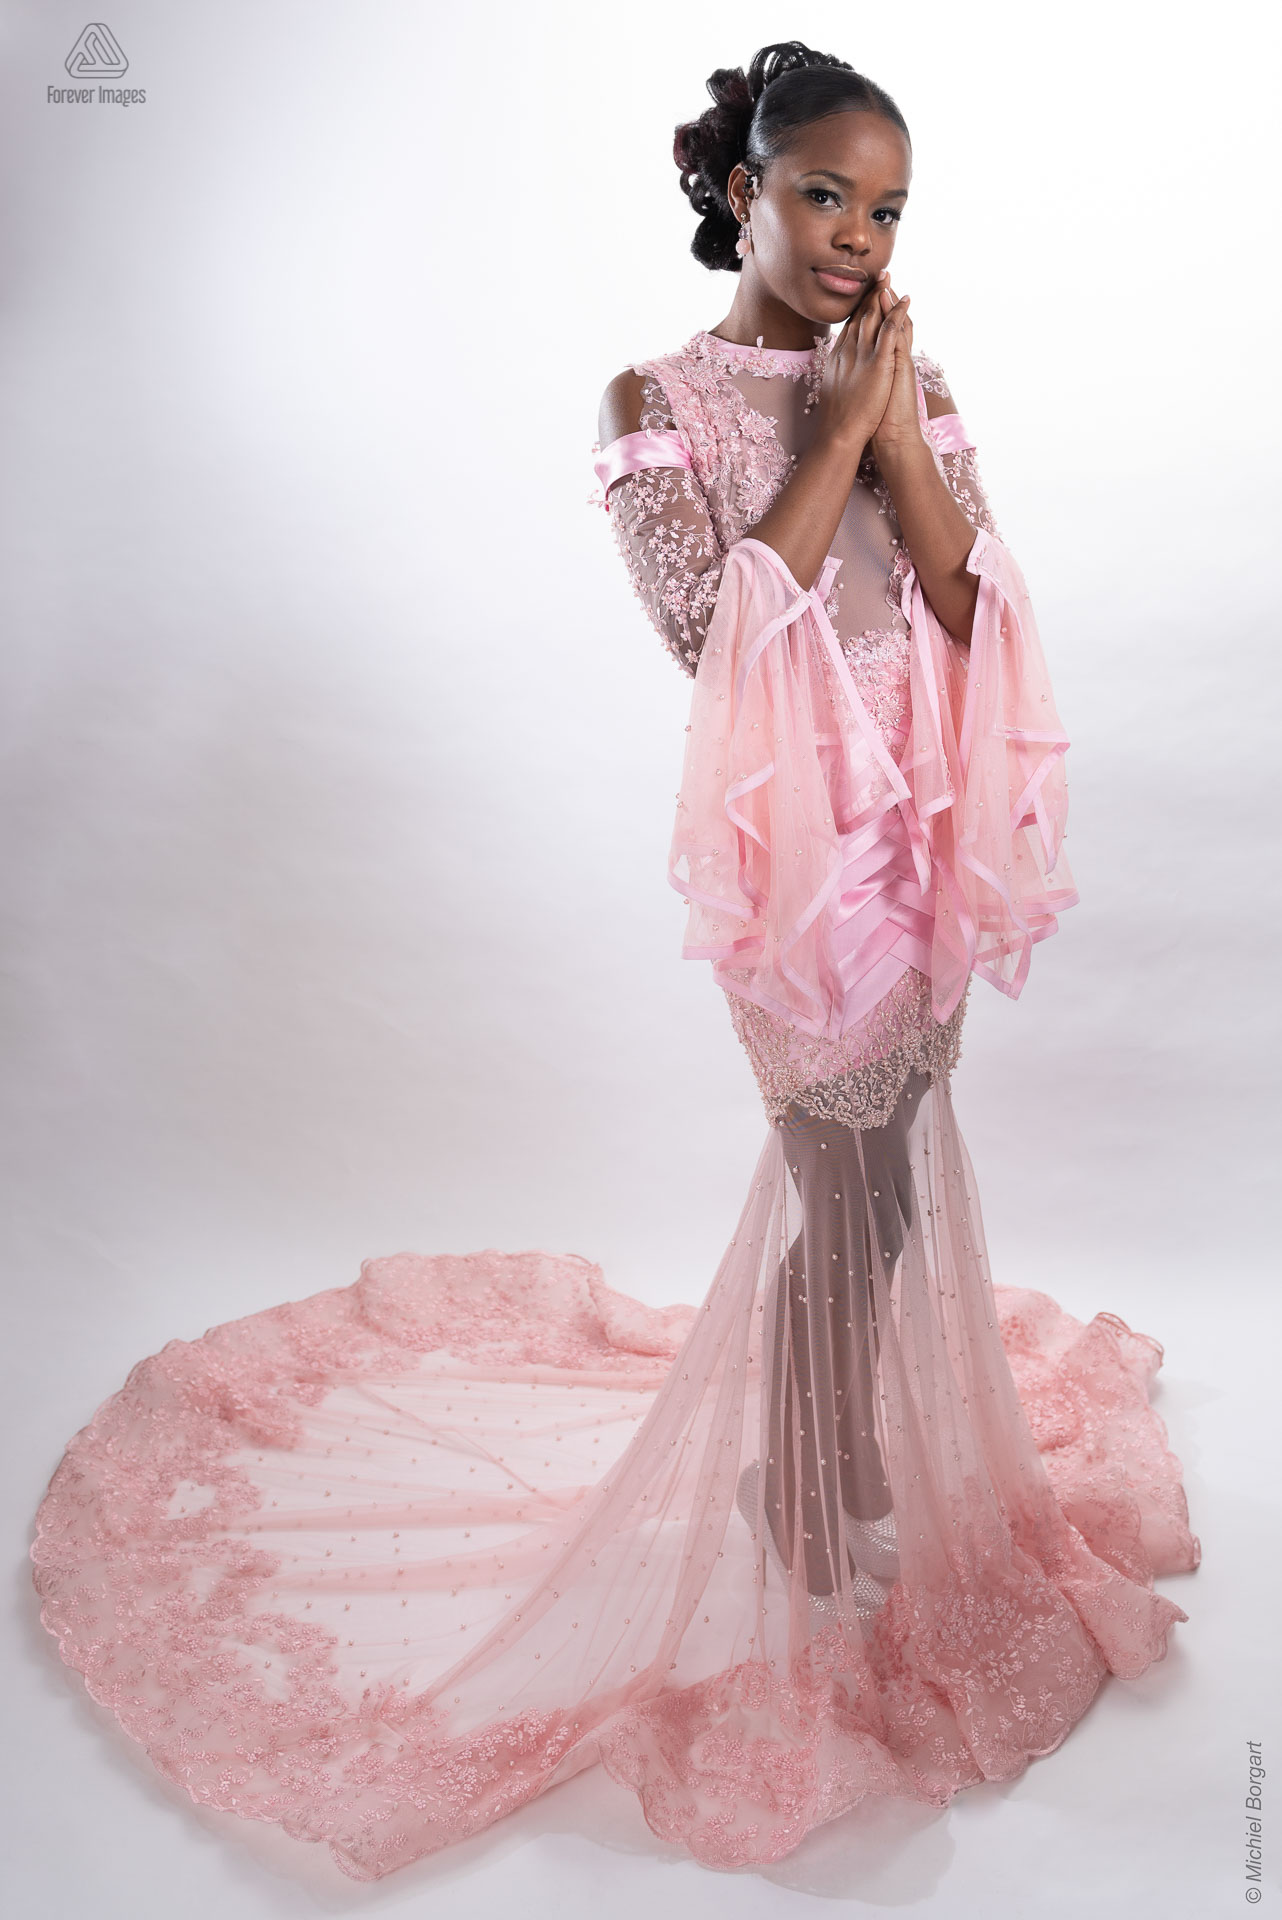 Fashionfoto roze jurk totaal | Mariangel Dolorita Miss Reina Seu Ronald Rizzo Piu Colore | Fashionfotograaf Michiel Borgart - Forever Images.